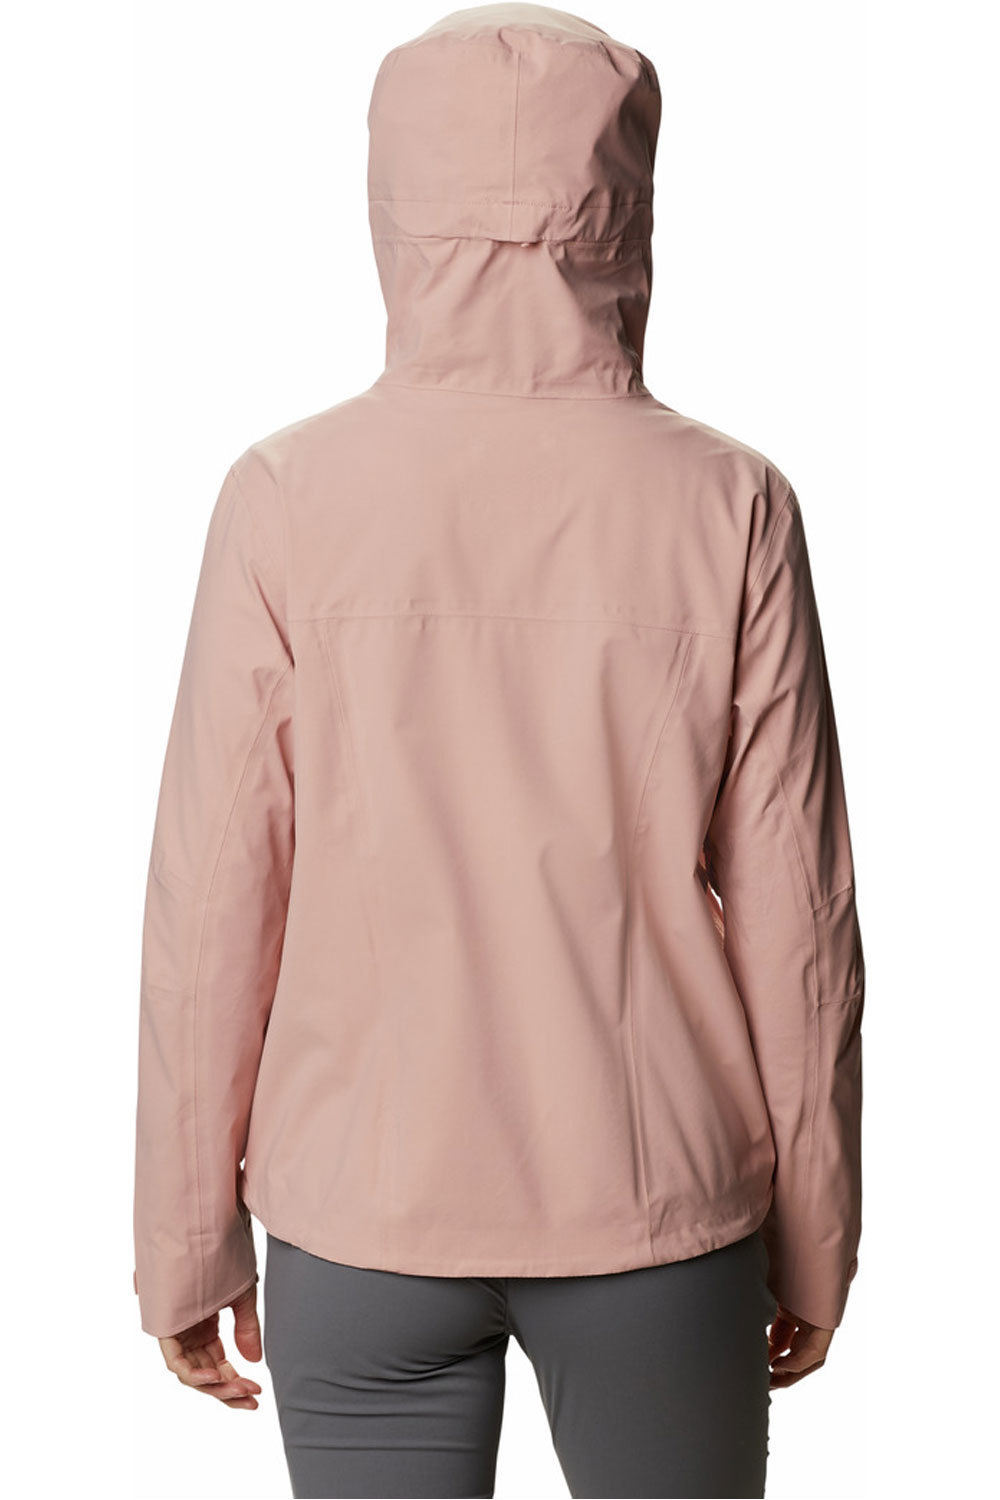 Columbia chaqueta impermeable mujer Omni-Tech Ampli-Dry Shell vista trasera